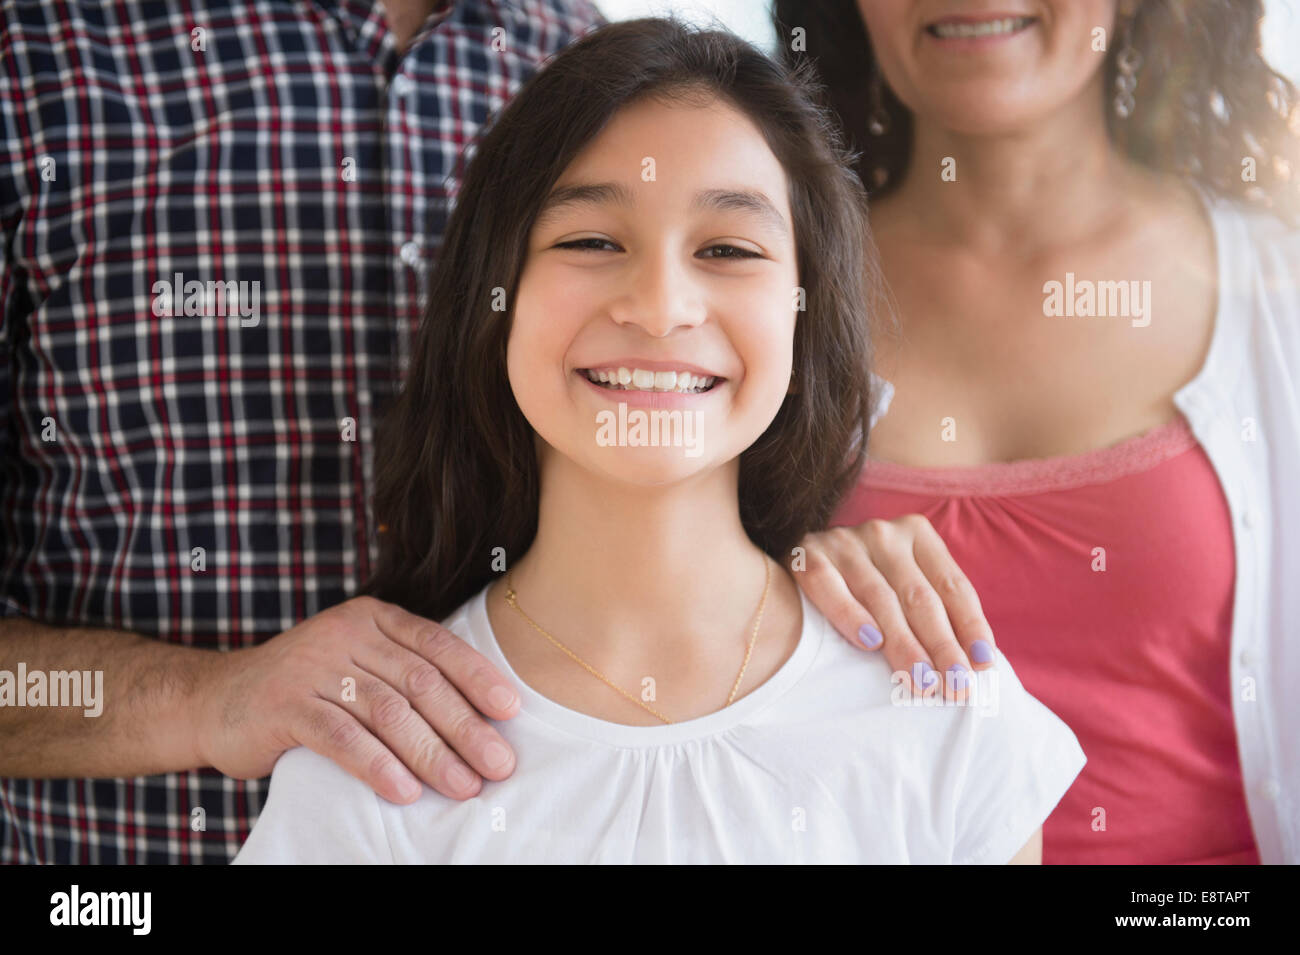 Hispanic girl smiling with parents Stock Photo